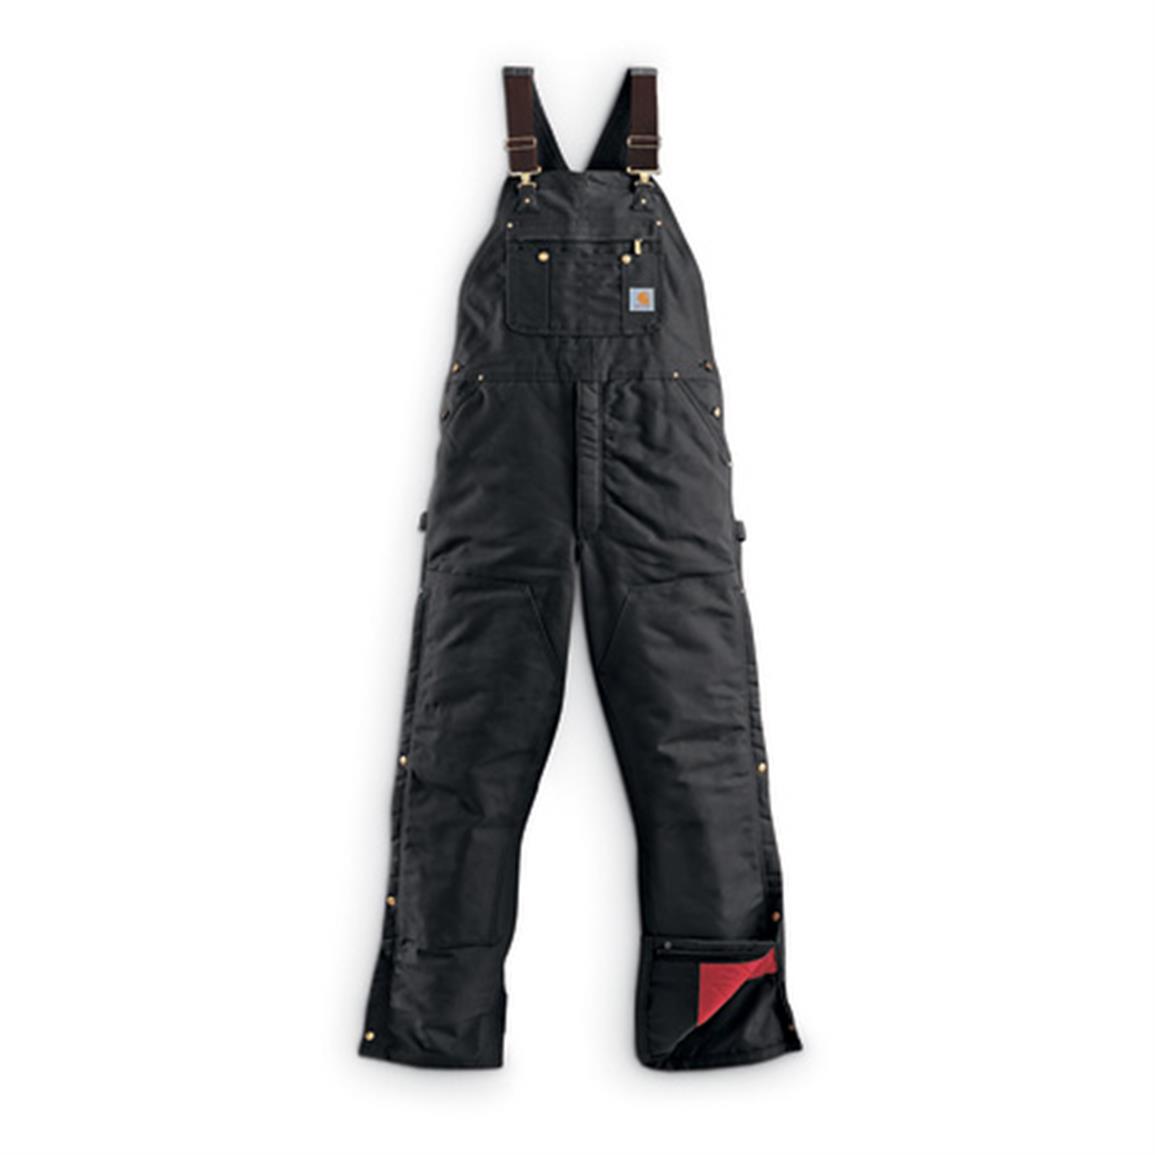 Carhartt Zip-To-Thigh Bib Overalls, Insulated - 666543, Insulated Pants ...